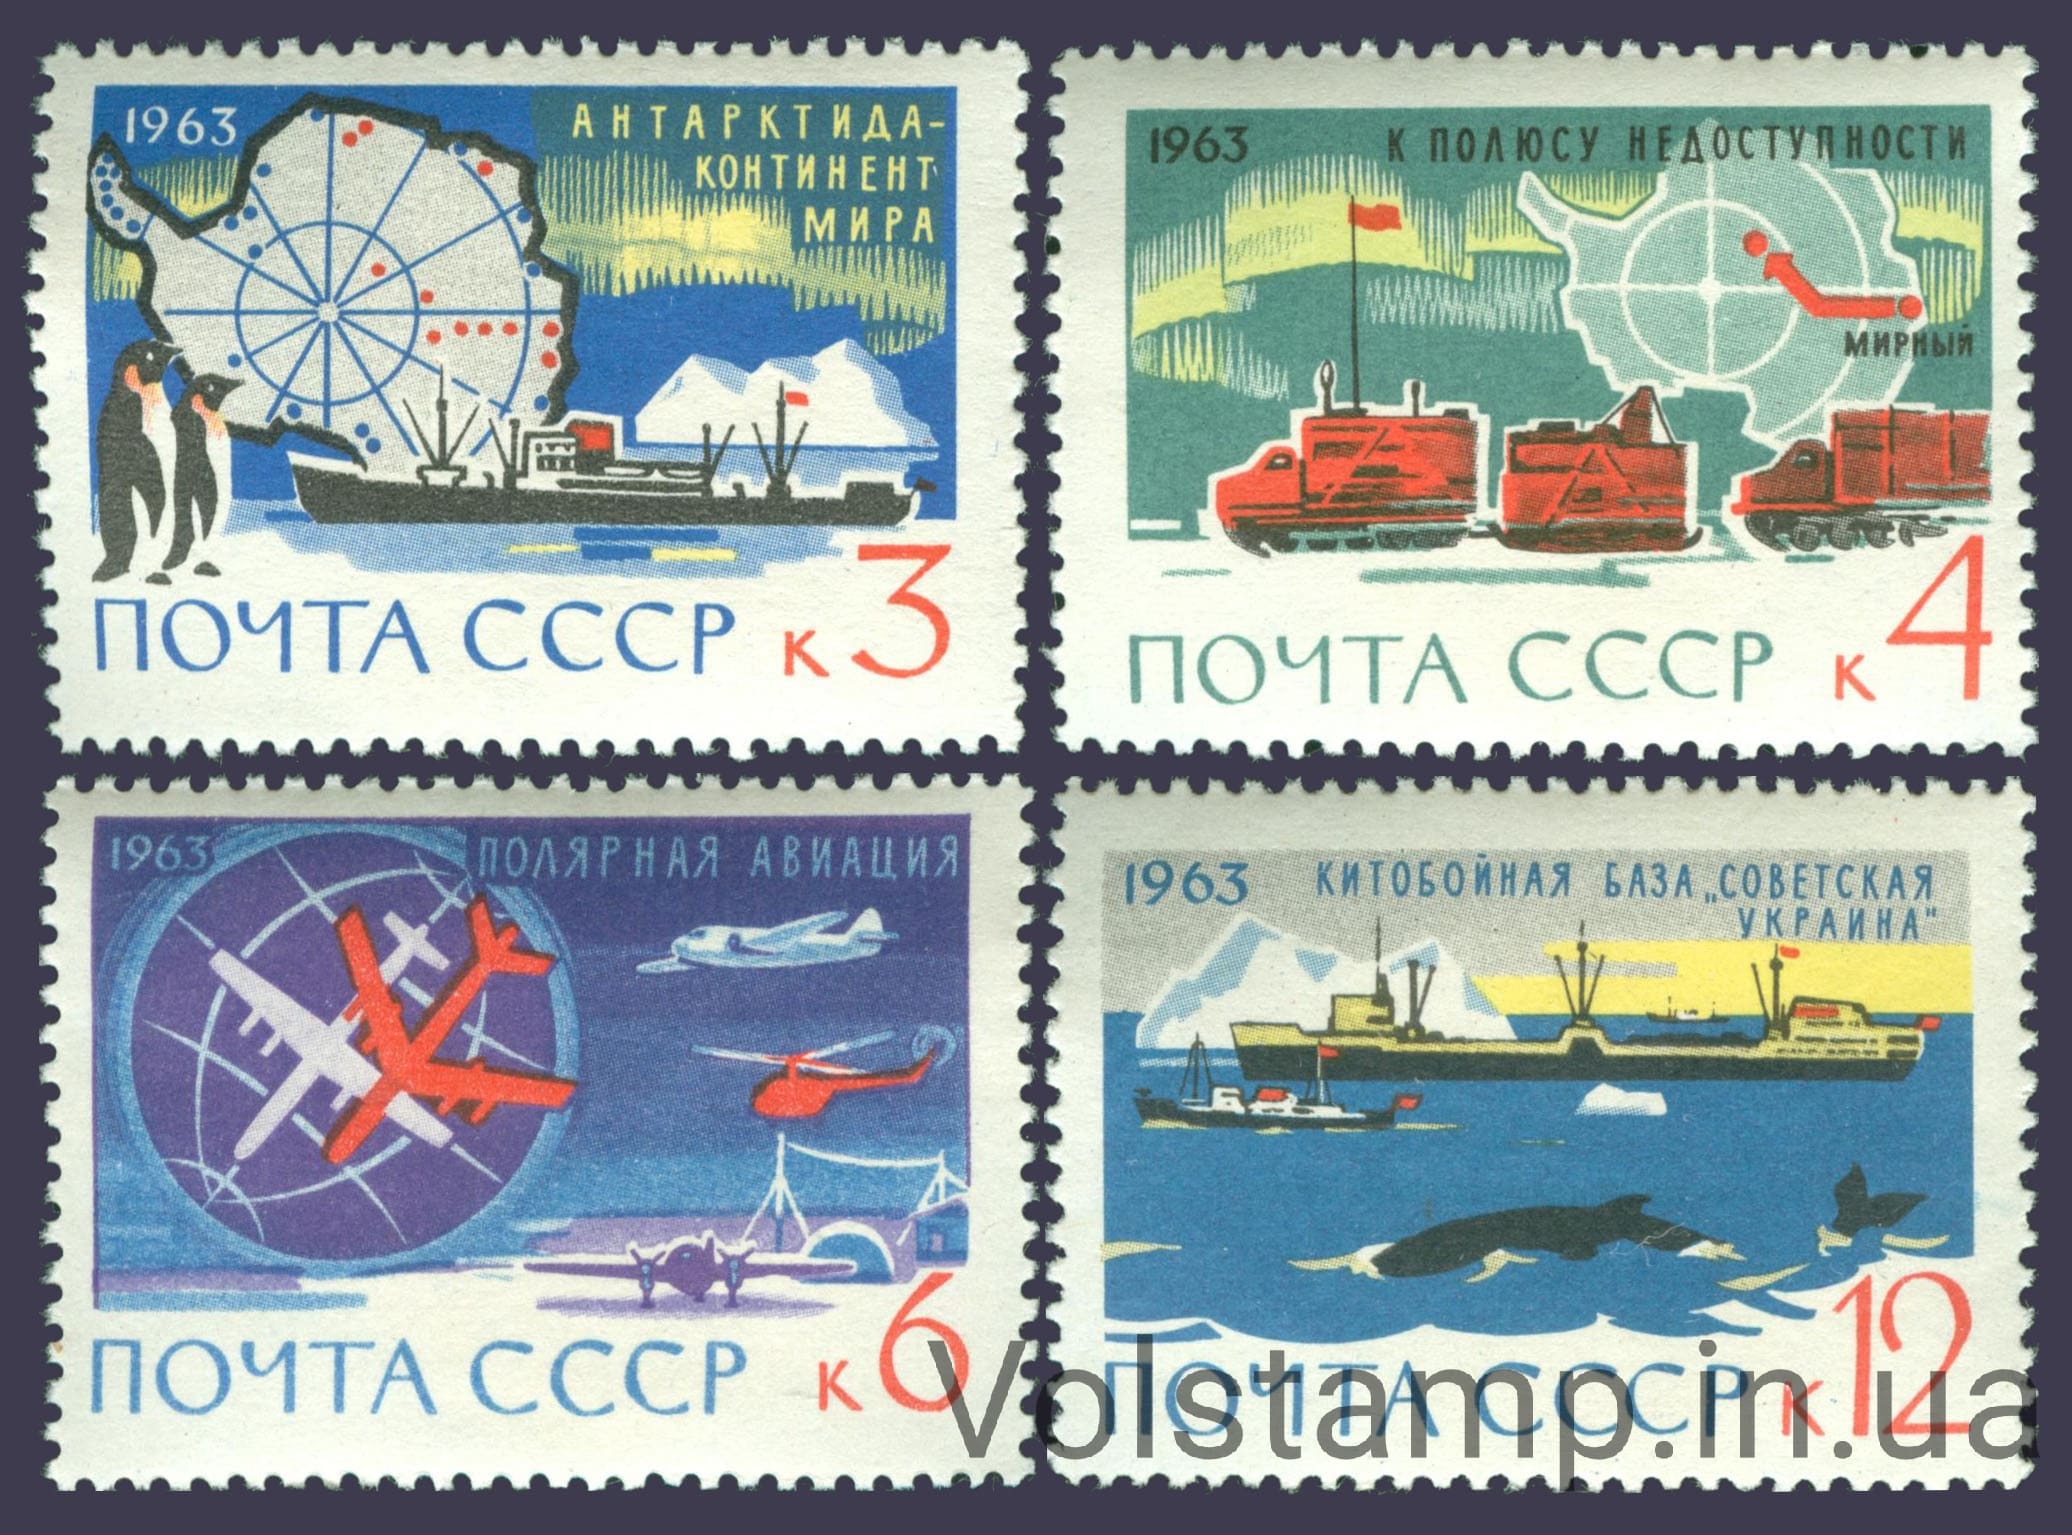 1963 серия марок Антарктида-континент мира №2822-2825